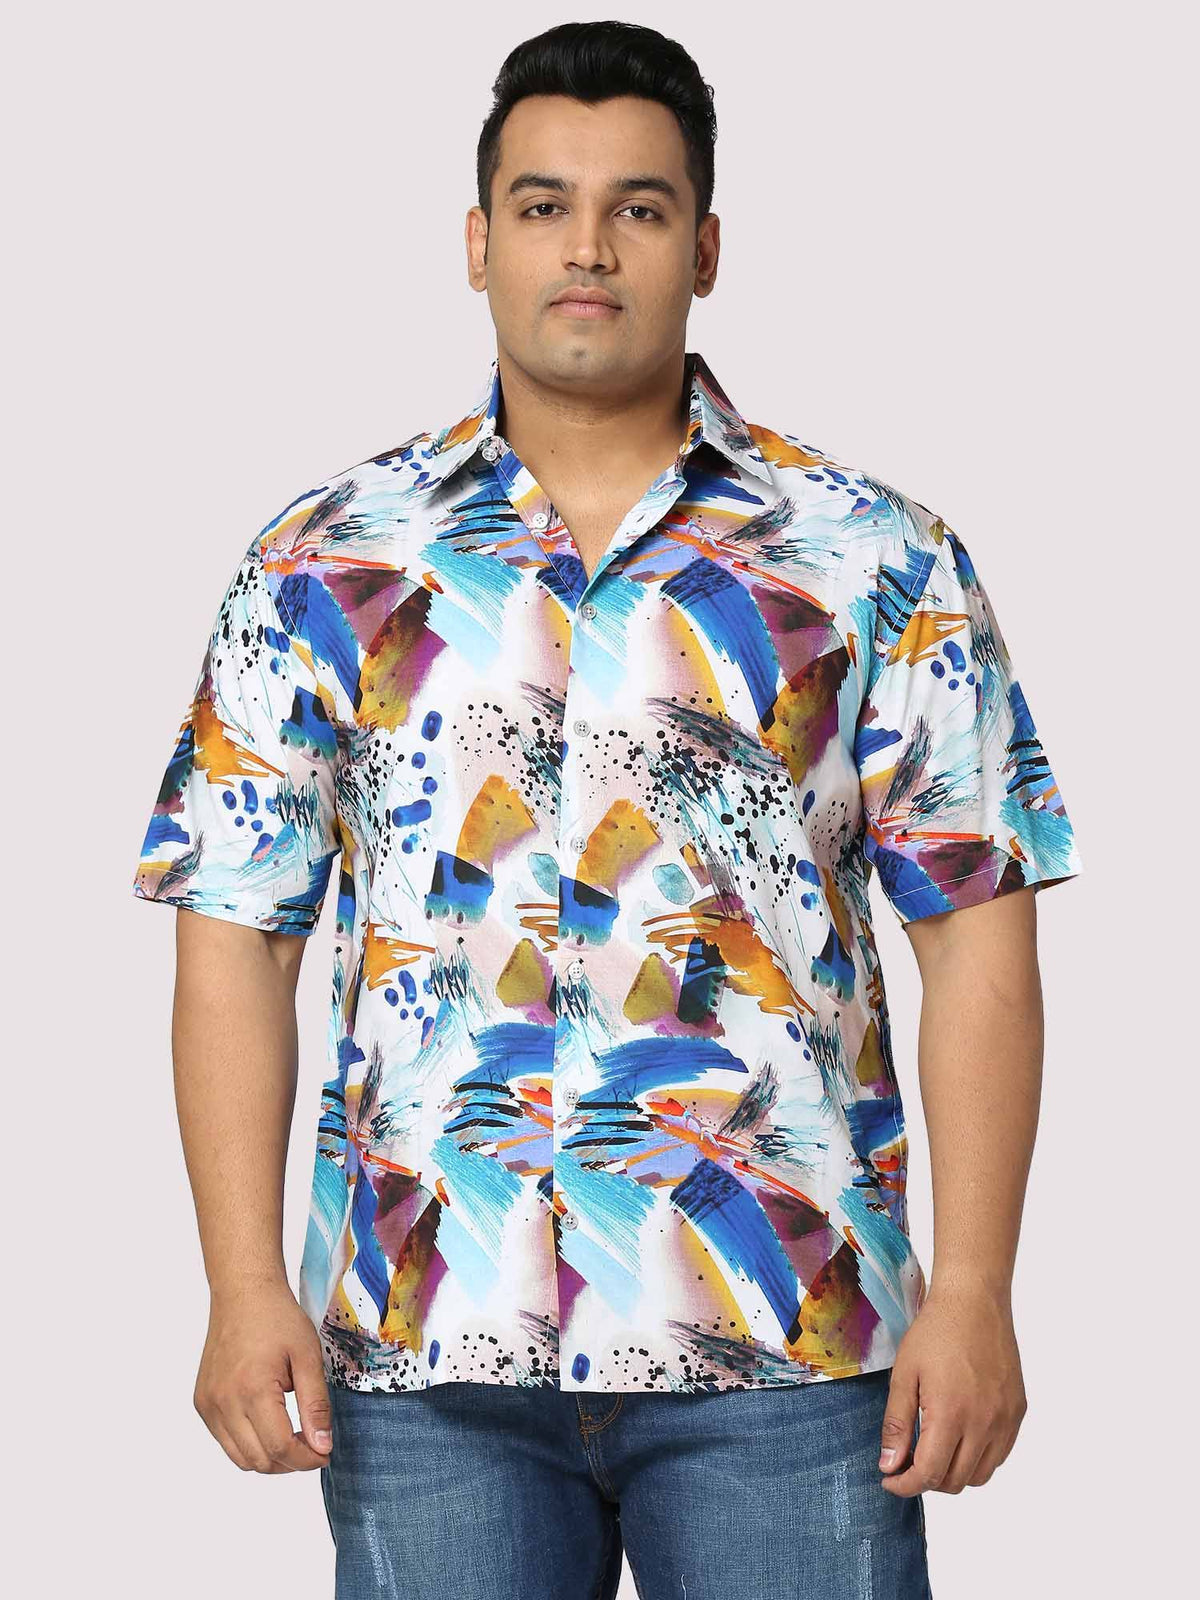 Yacht Digital Printed Half Shirt Men's Plus Size - Guniaa Fashions